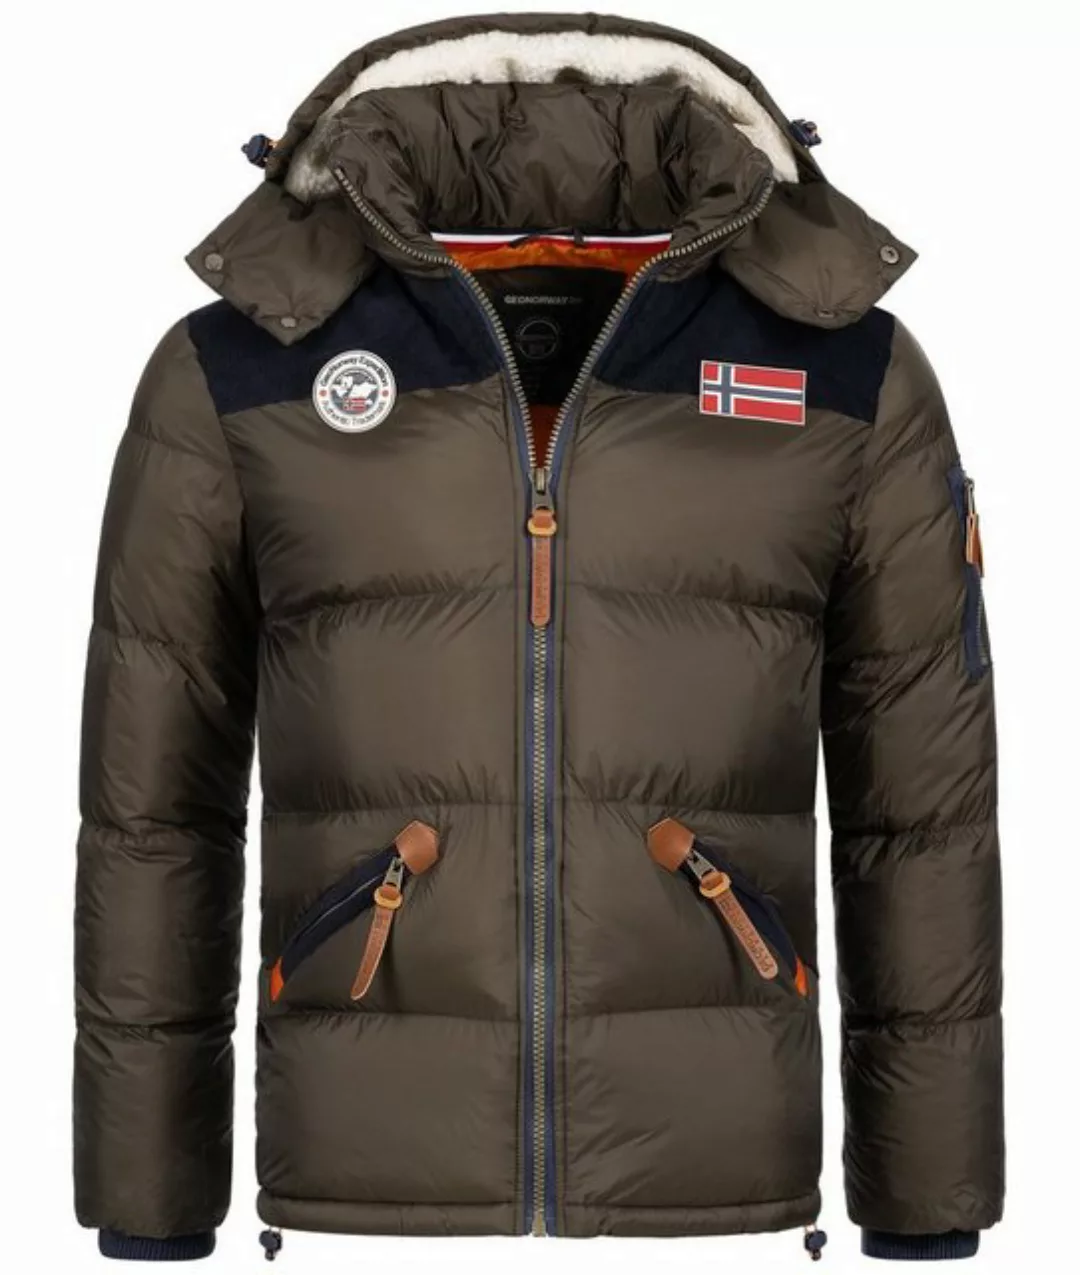 Geographical Norway Winterjacke Herren Winter Jacke Steppjacke H-253 günstig online kaufen